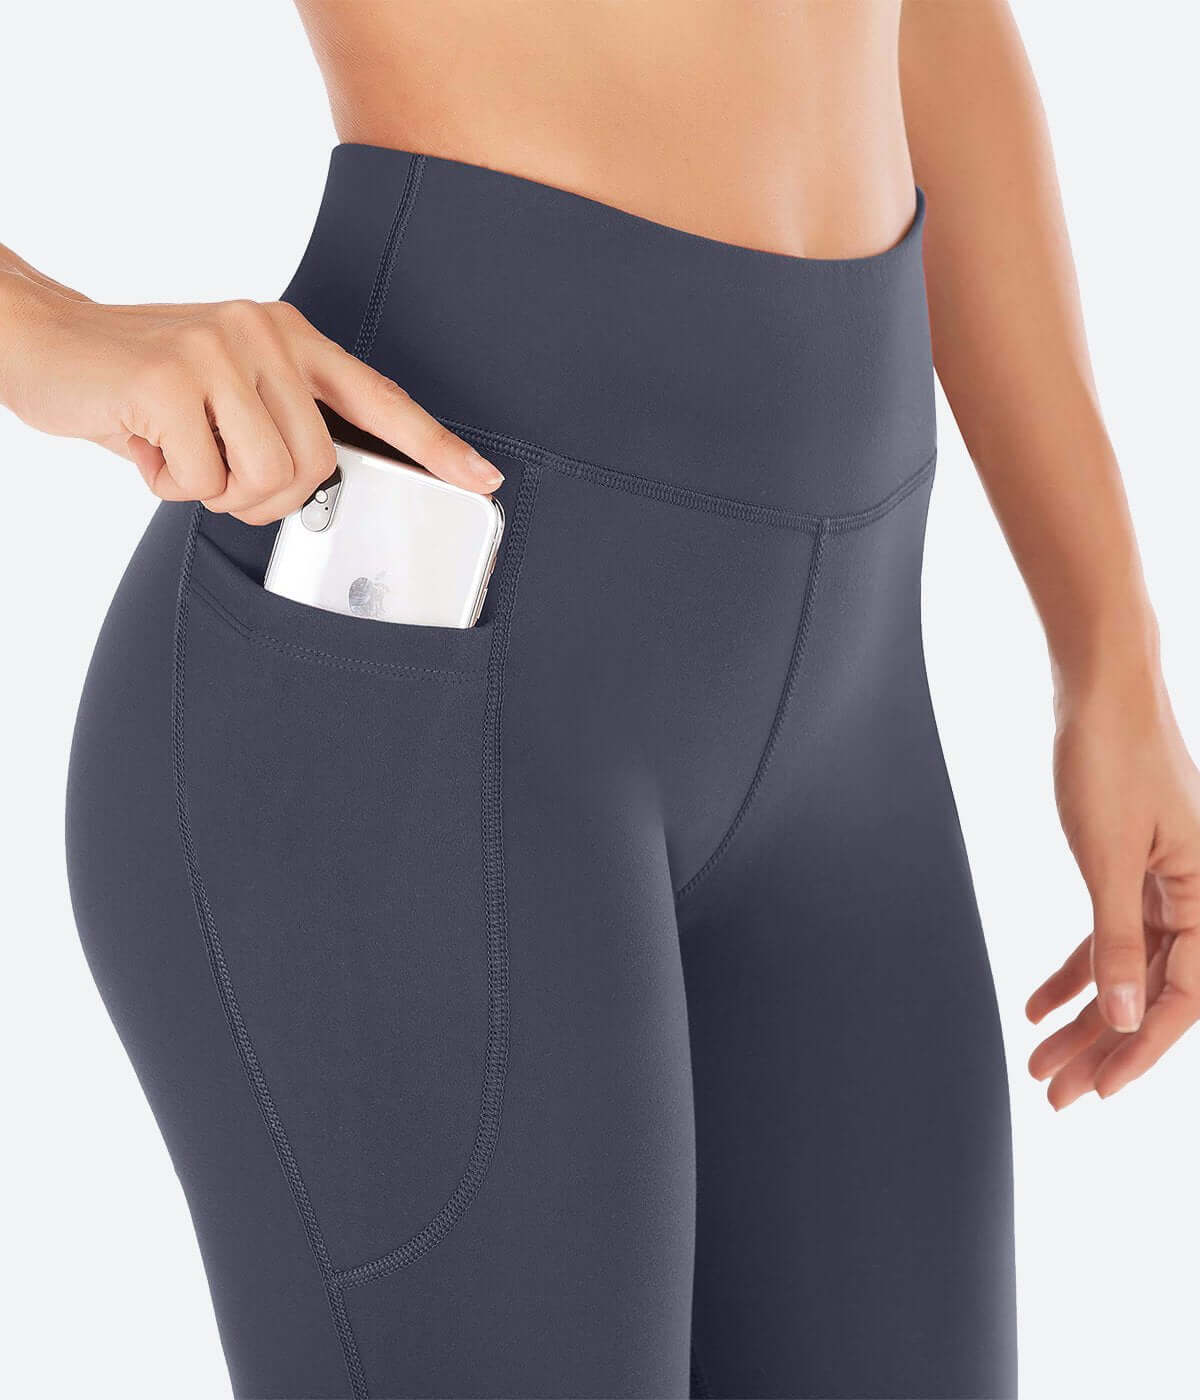  Hanna Nikole Women's Bootcut Yoga Pants with Pockets